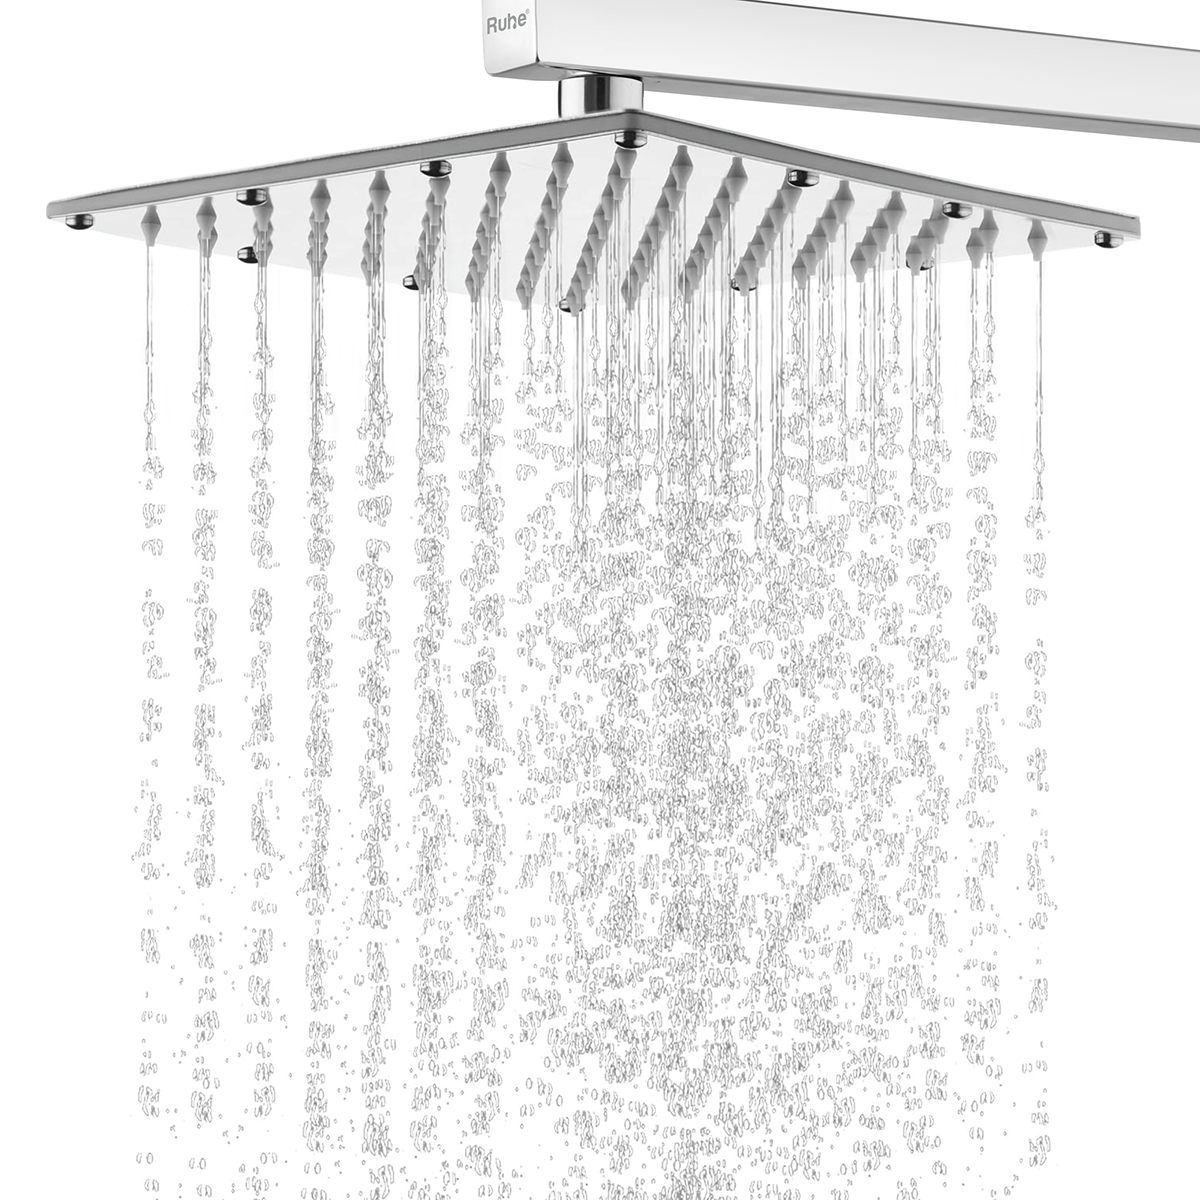 Rain Joy 304-Grade Overhead Shower (4 x 4 Inches) installed